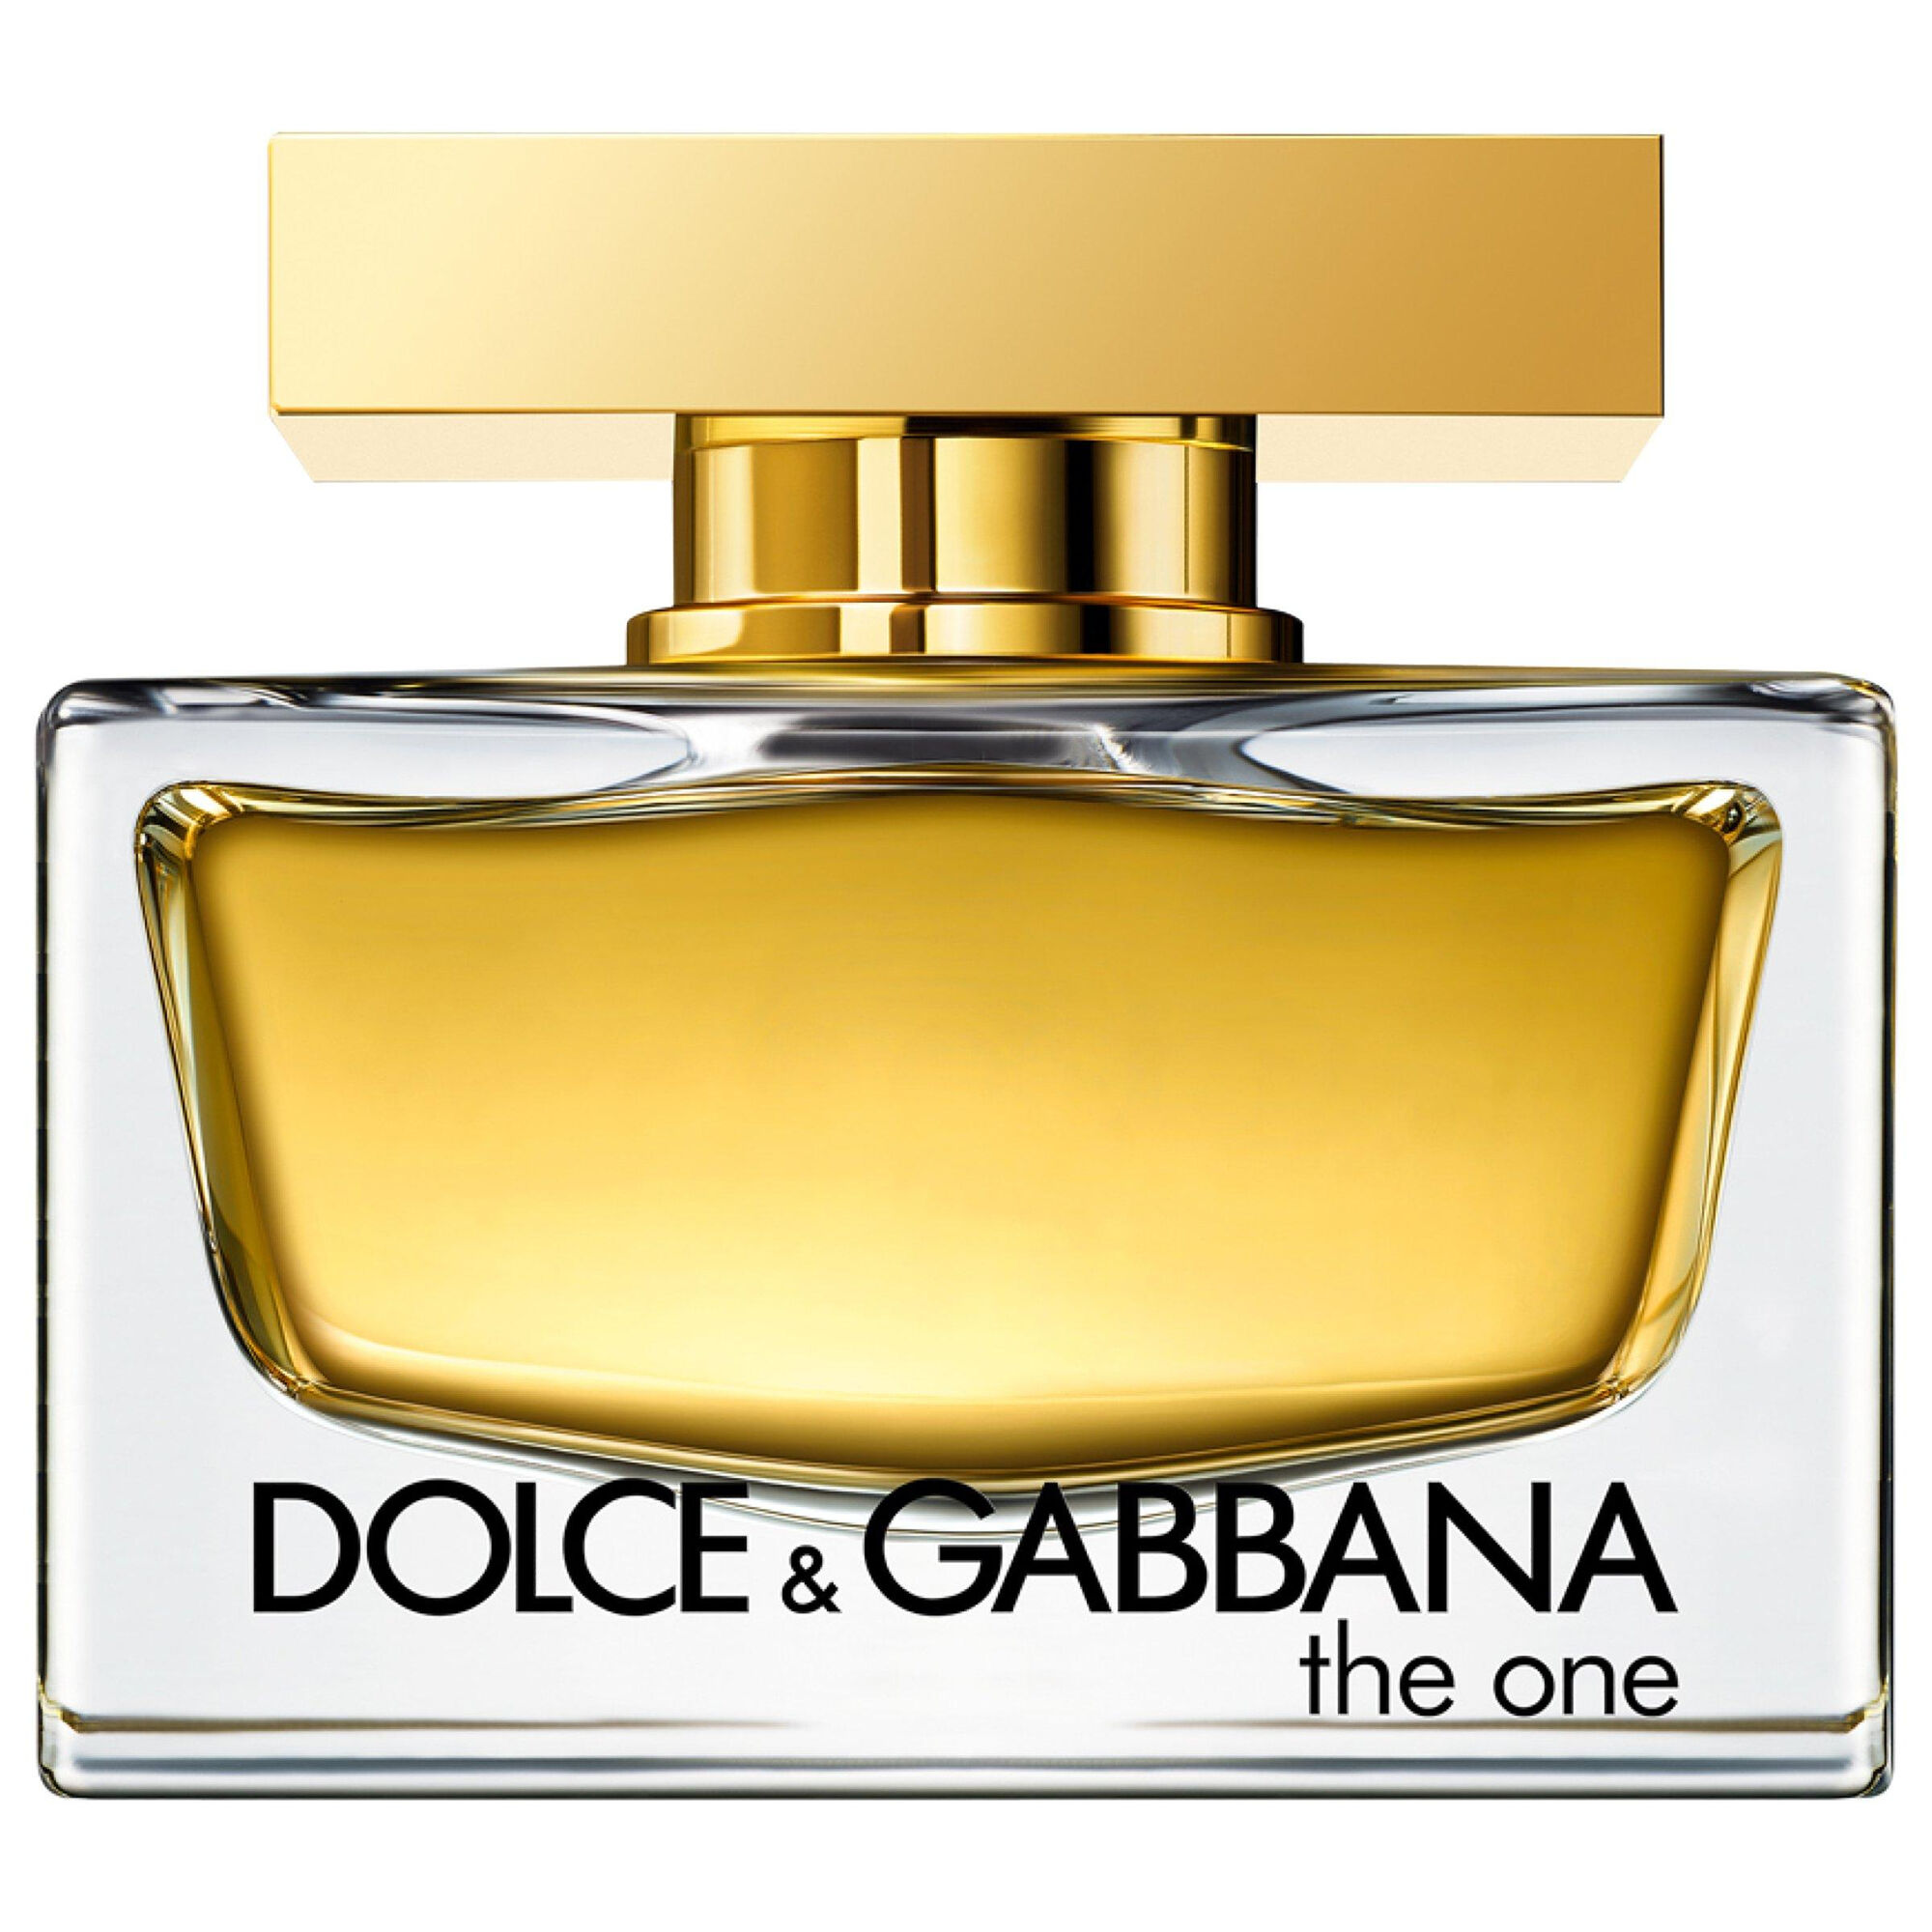 Дольче габбана ван цена. The one women Dolce&Gabbana 75 мл. Dolce Gabbana the one 75 ml. Евро Dolce & Gabbana the one,EDP., 75 ml. Дольче Габбана the one 50 мл женские.